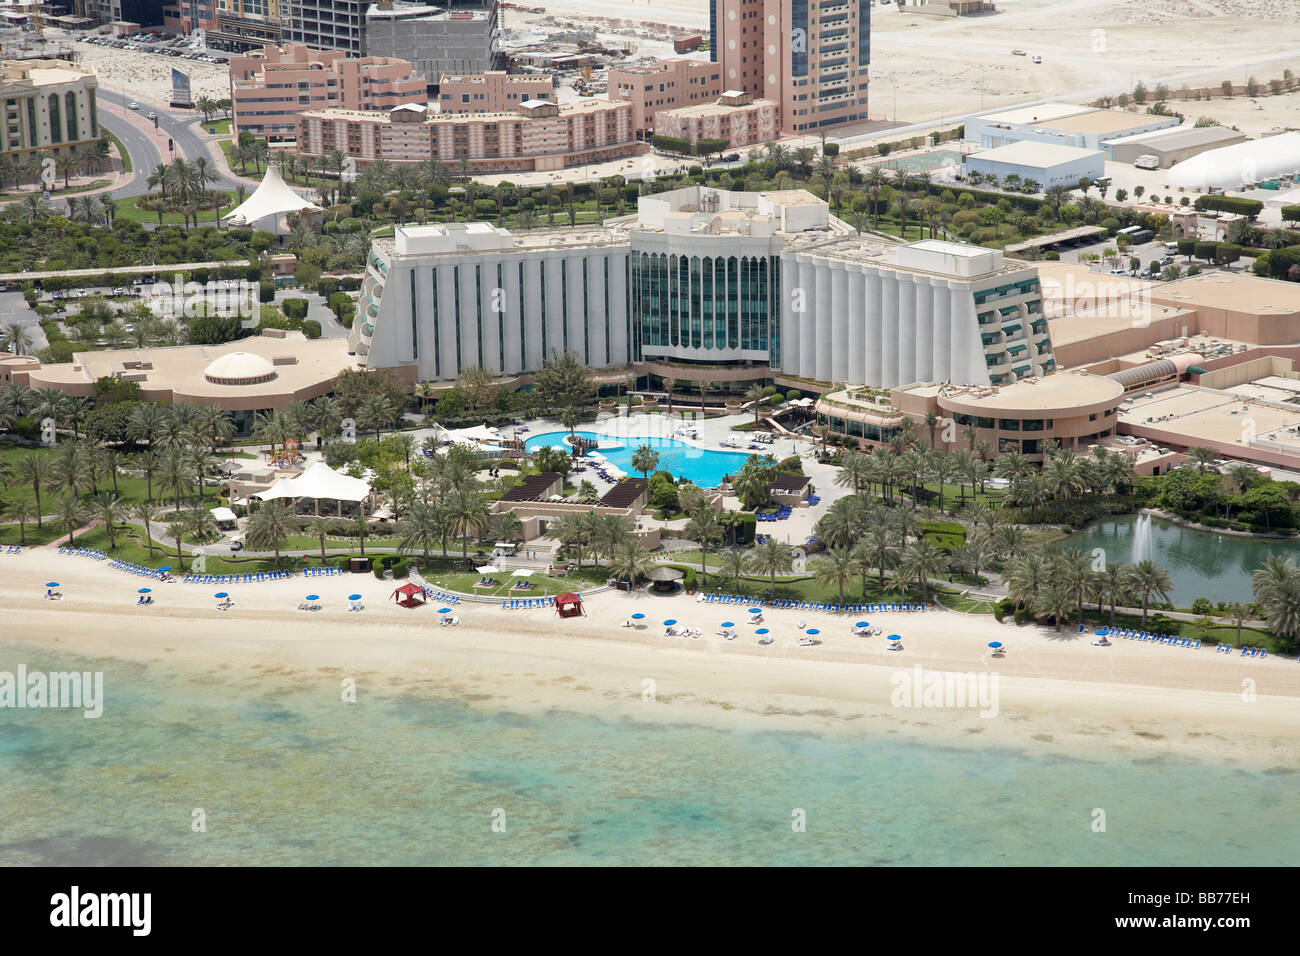 Aerial photograph of the Ritz Carlton Hotel and resort Manama Bahrain Stock Photo